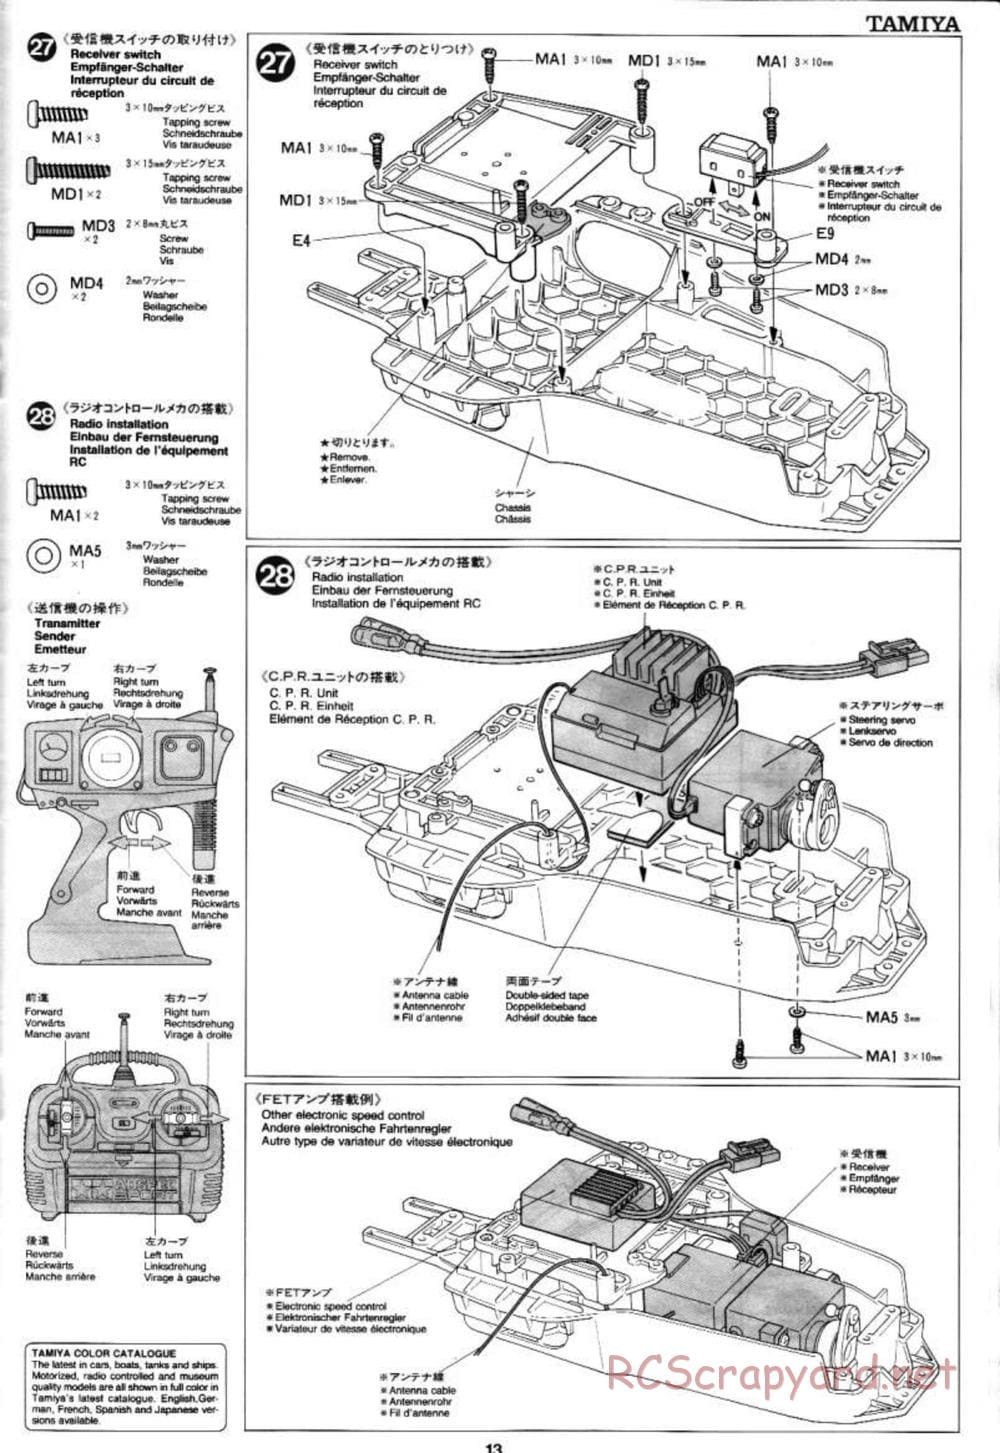 Tamiya - Blazing Star Chassis - Manual - Page 13